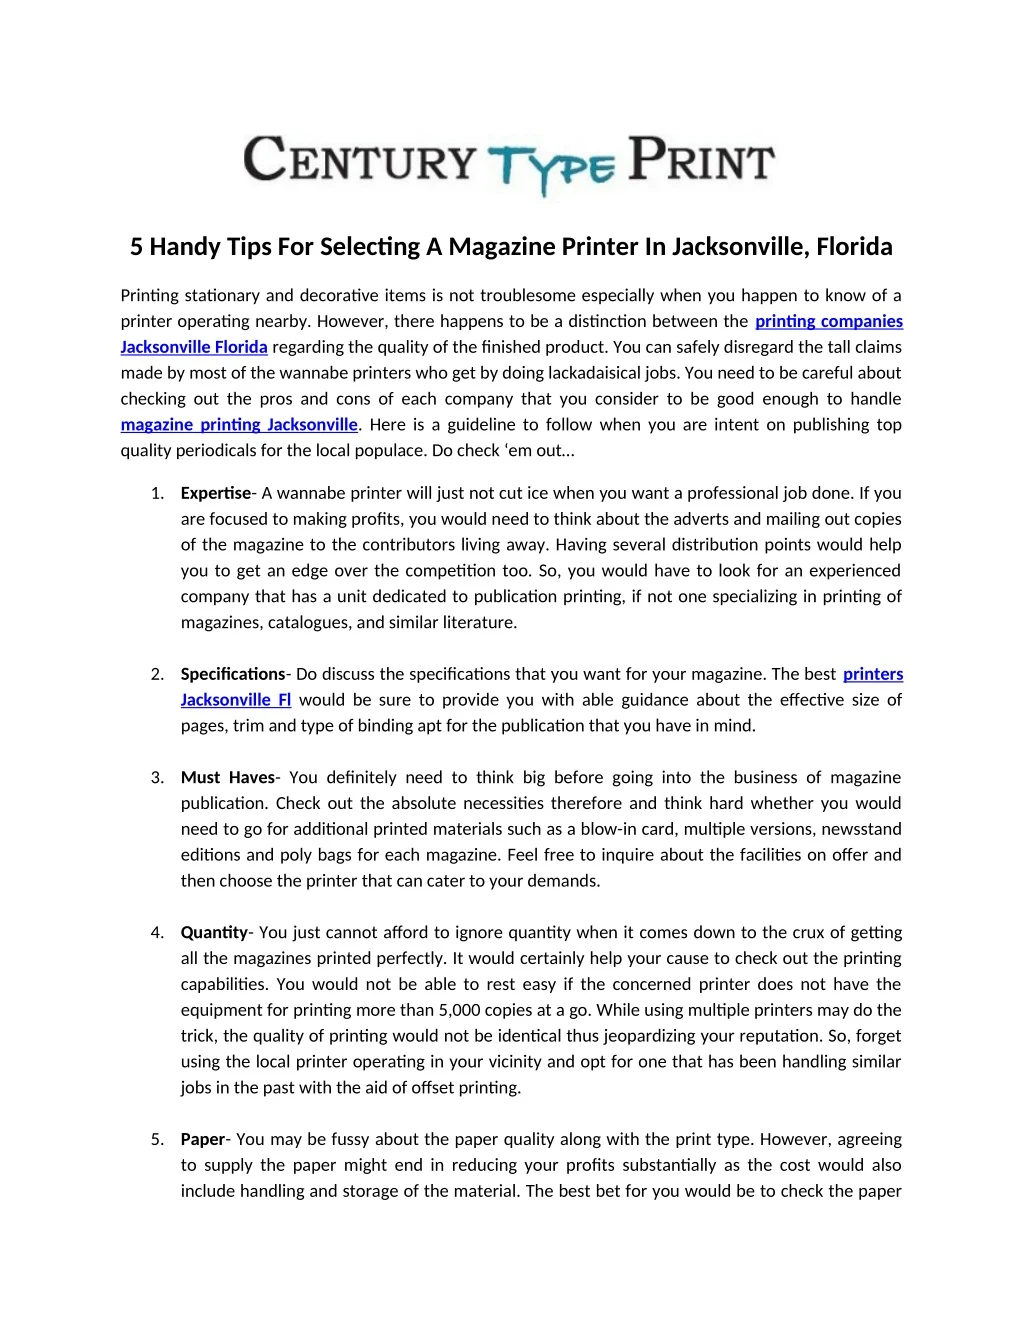 5 handy tips for selecting a magazine printer